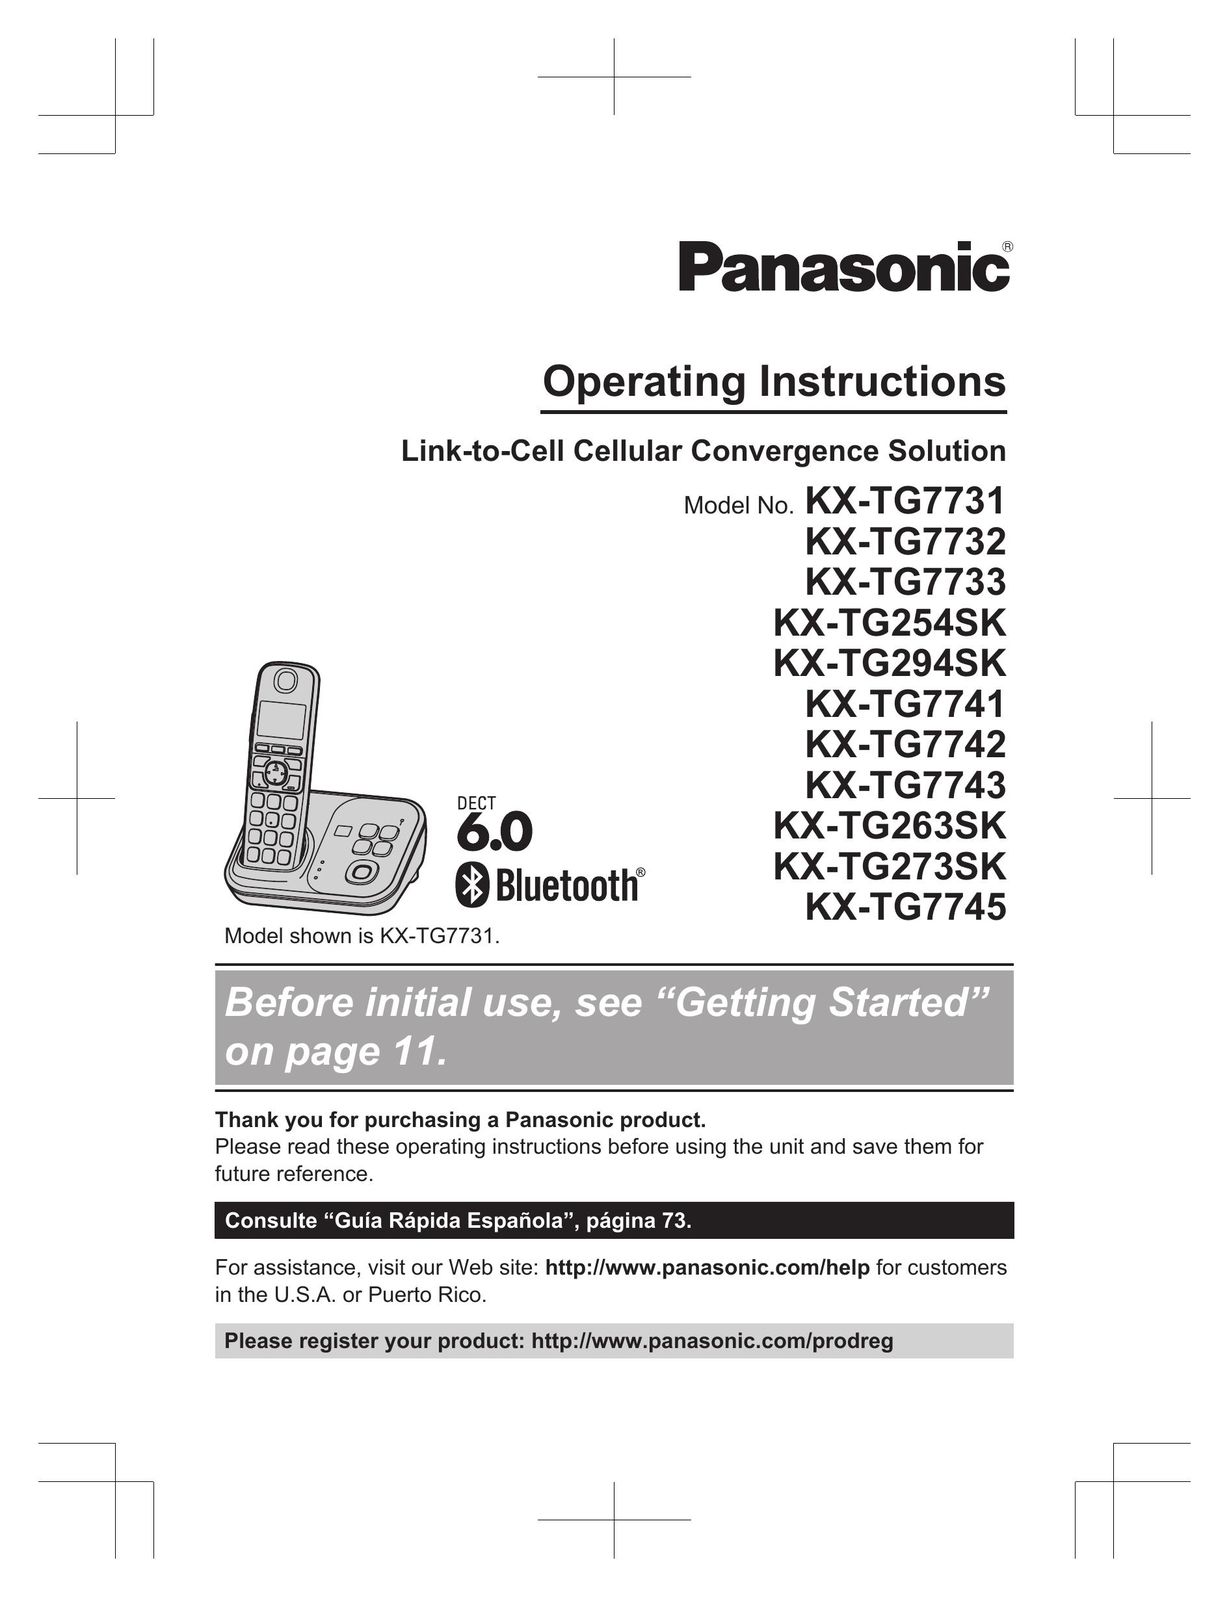 Panasonic KX-TG7745 Carrying Case User Manual (Page 1)